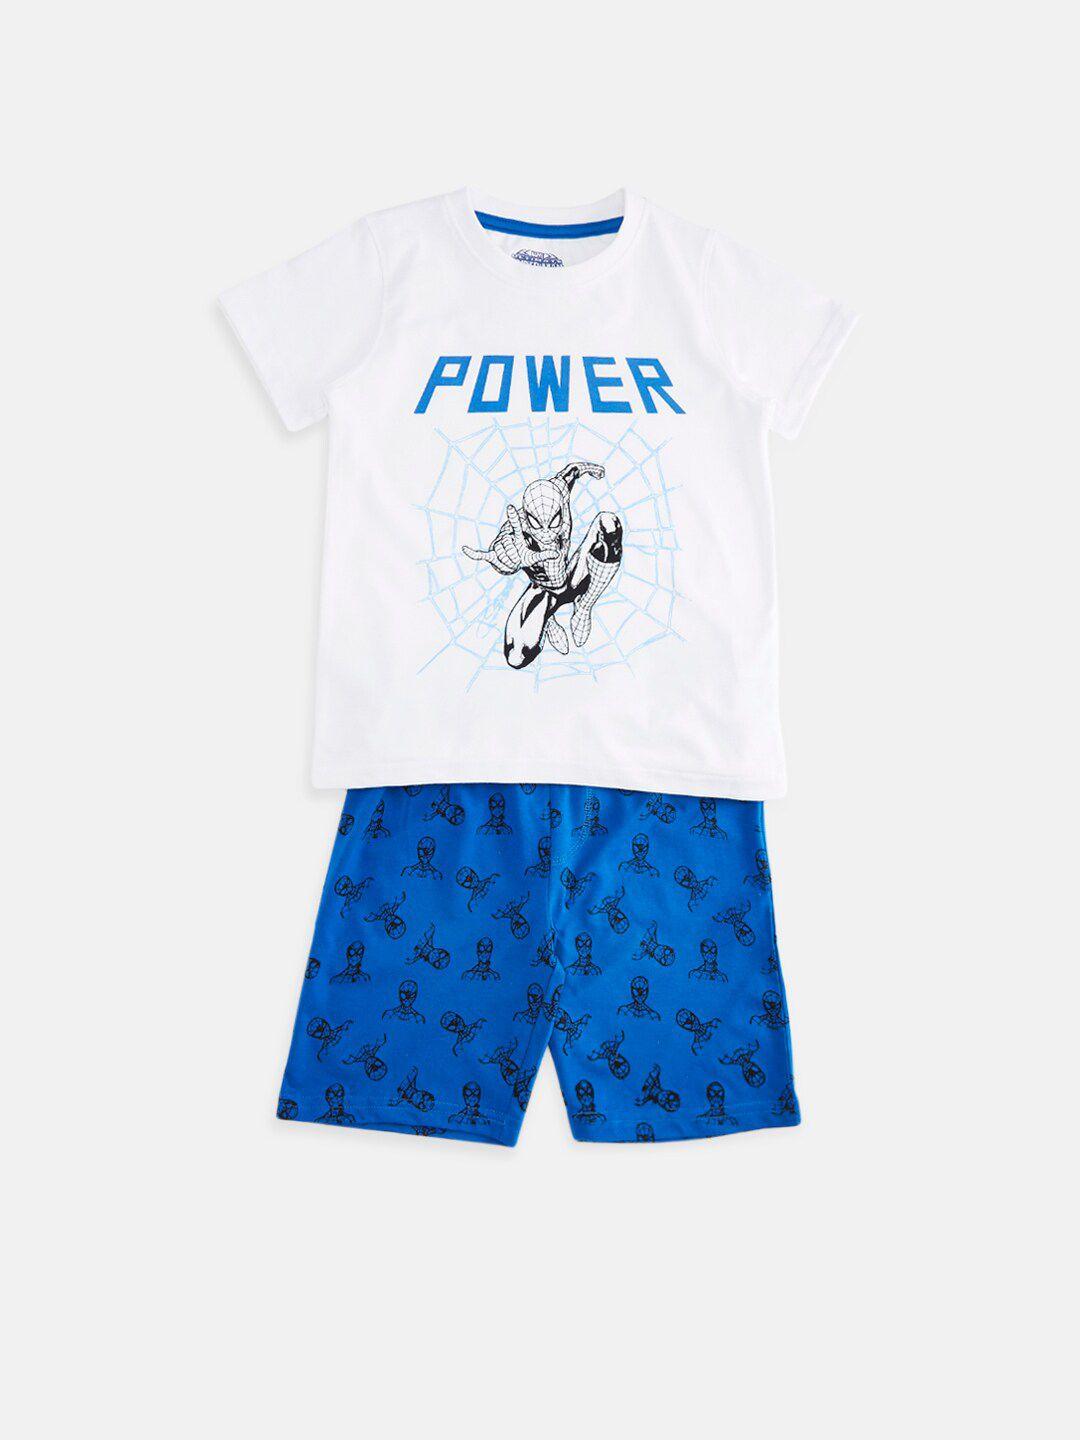 pantaloons-junior-boys-superhero-spiderman-graphic-printed-pure-cotton-t-shirt-with-shorts